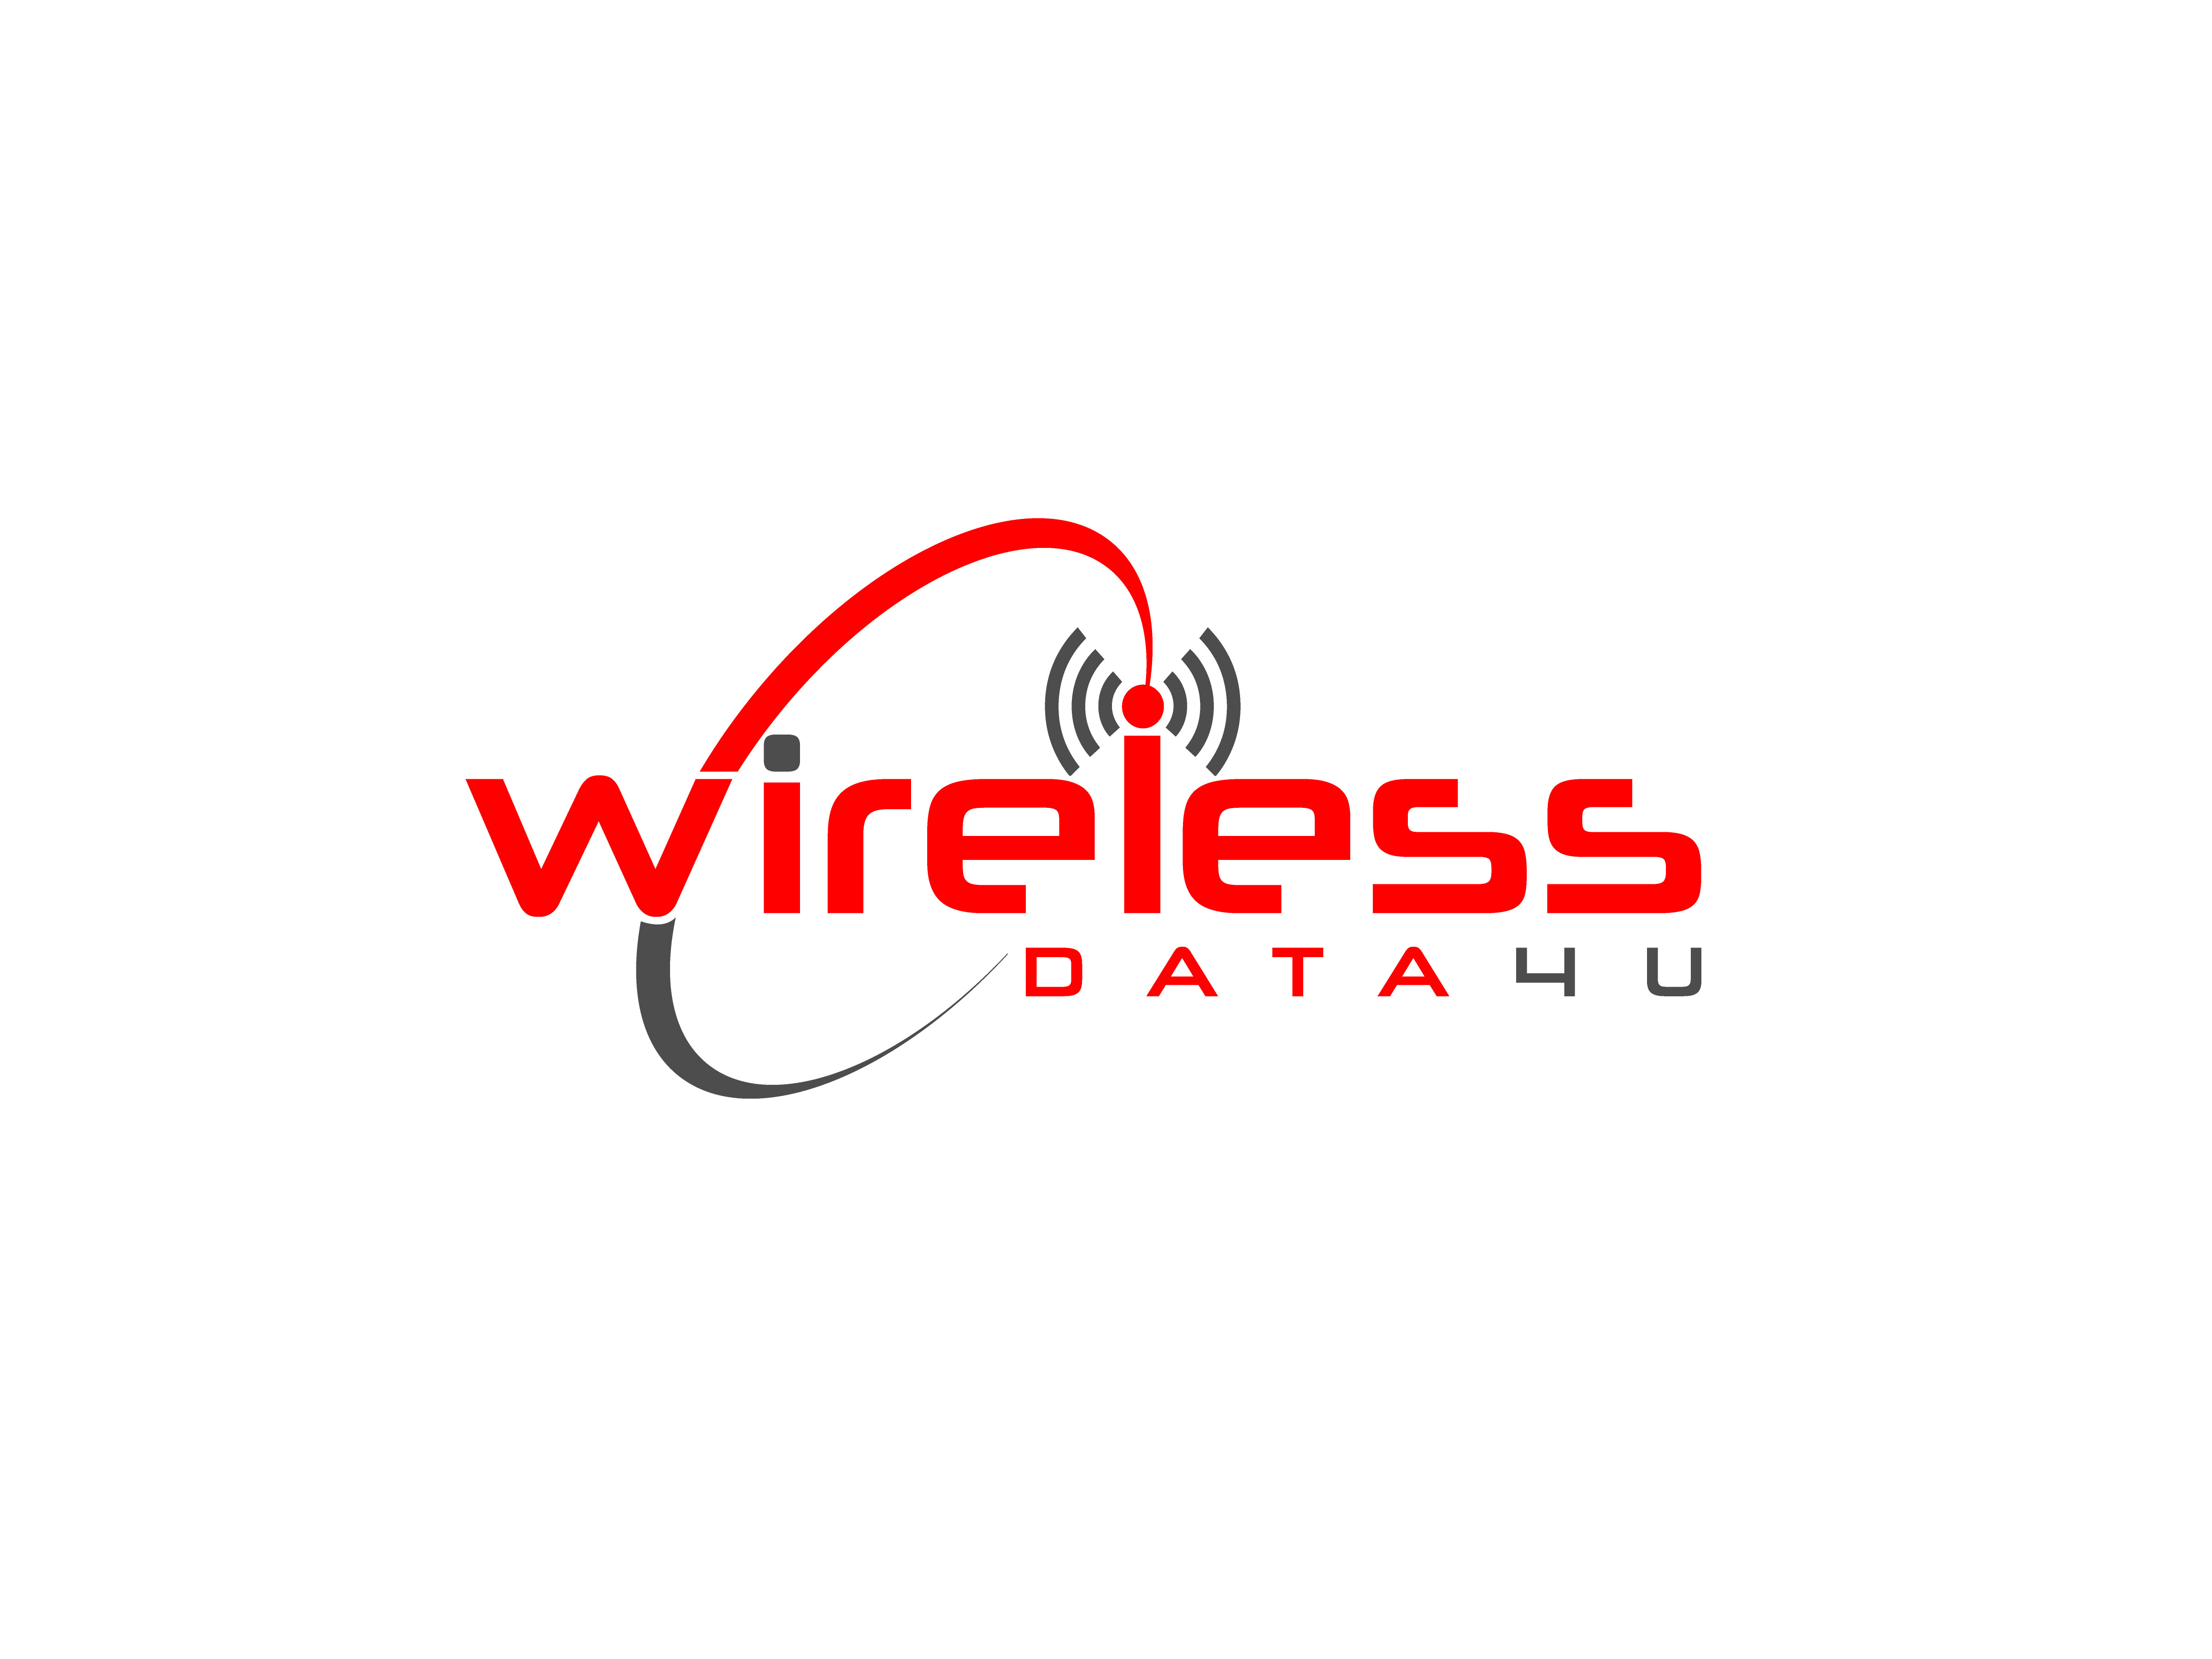 Wireless Data